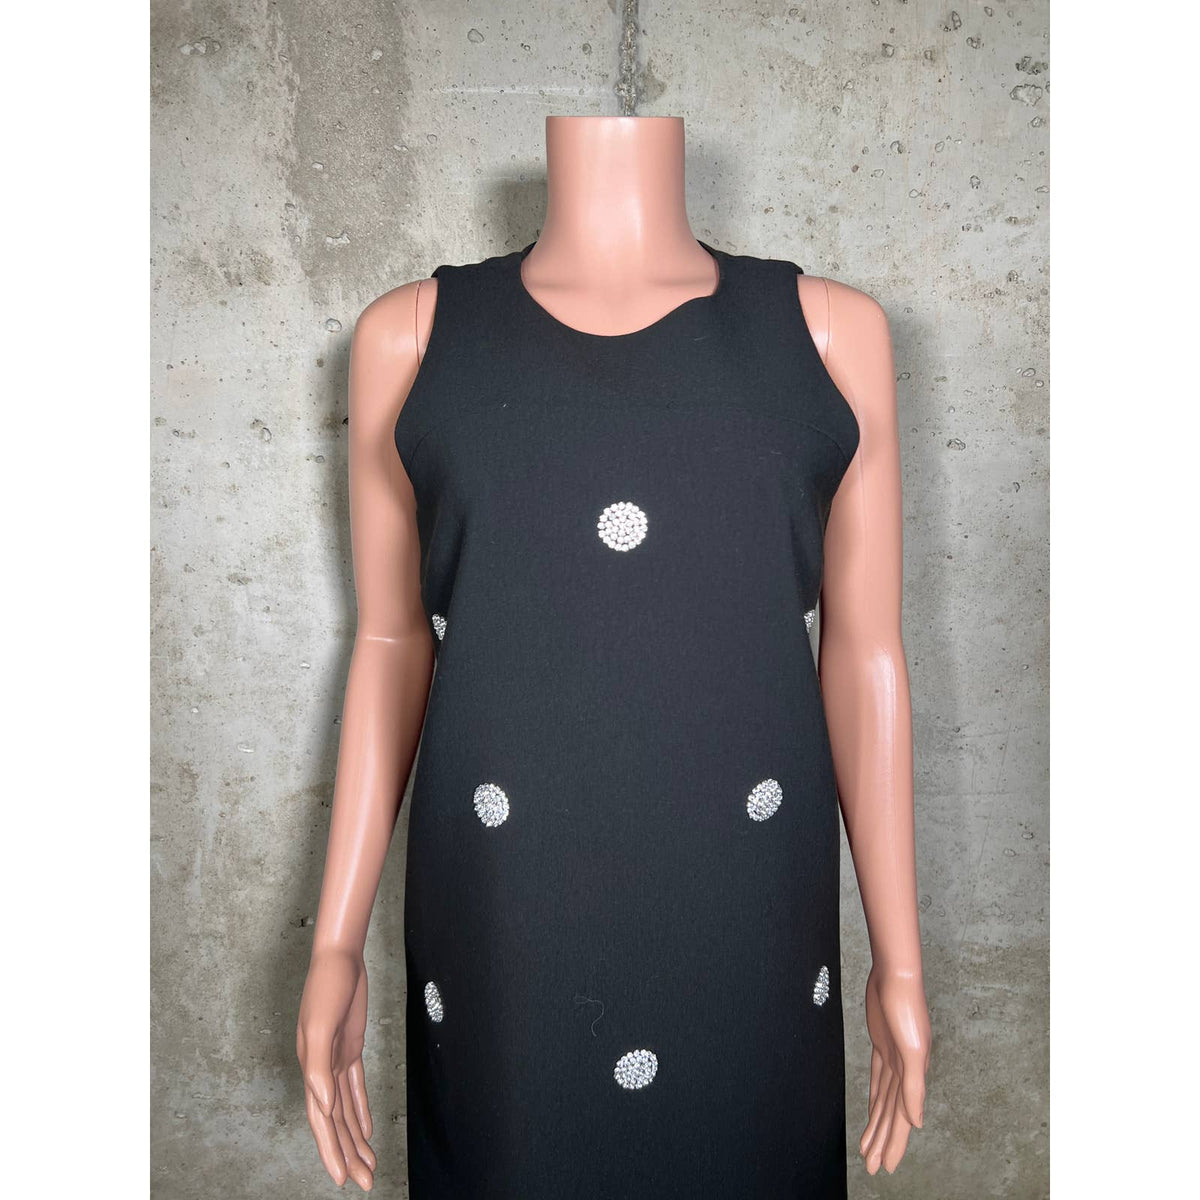 Kate Spade Black Embellished Sleeveless Dress Sz.8